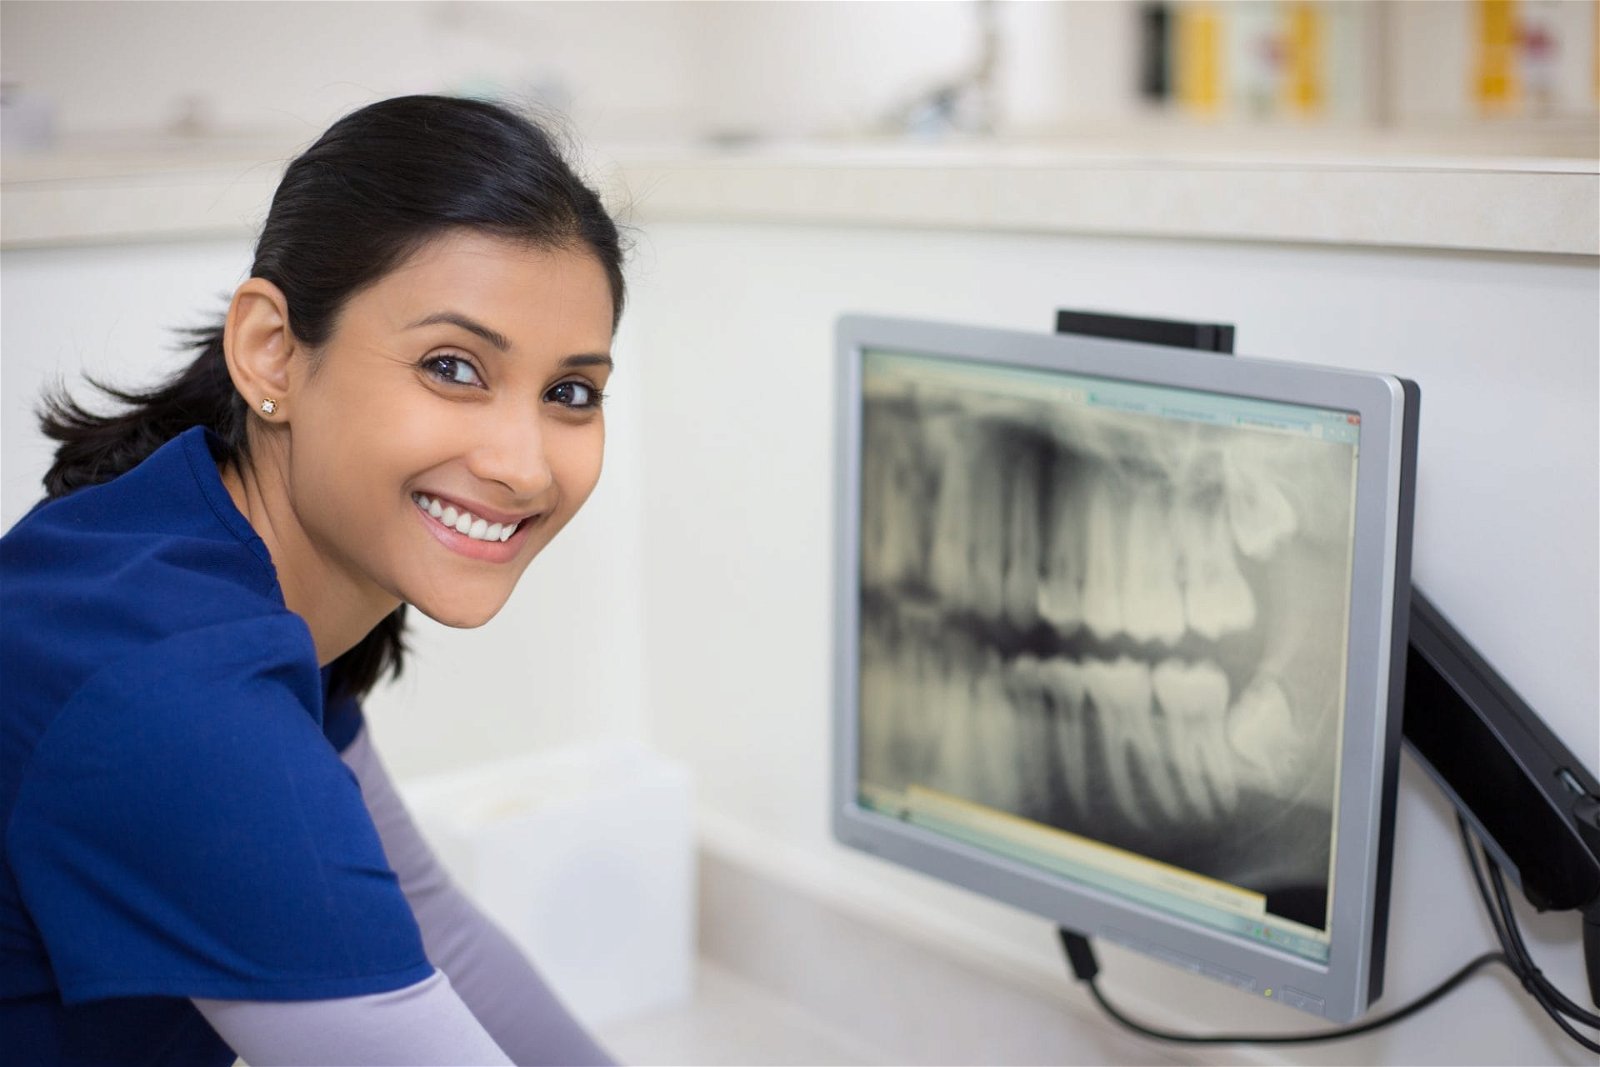 Where Should I Go for Dental Assistant Training?